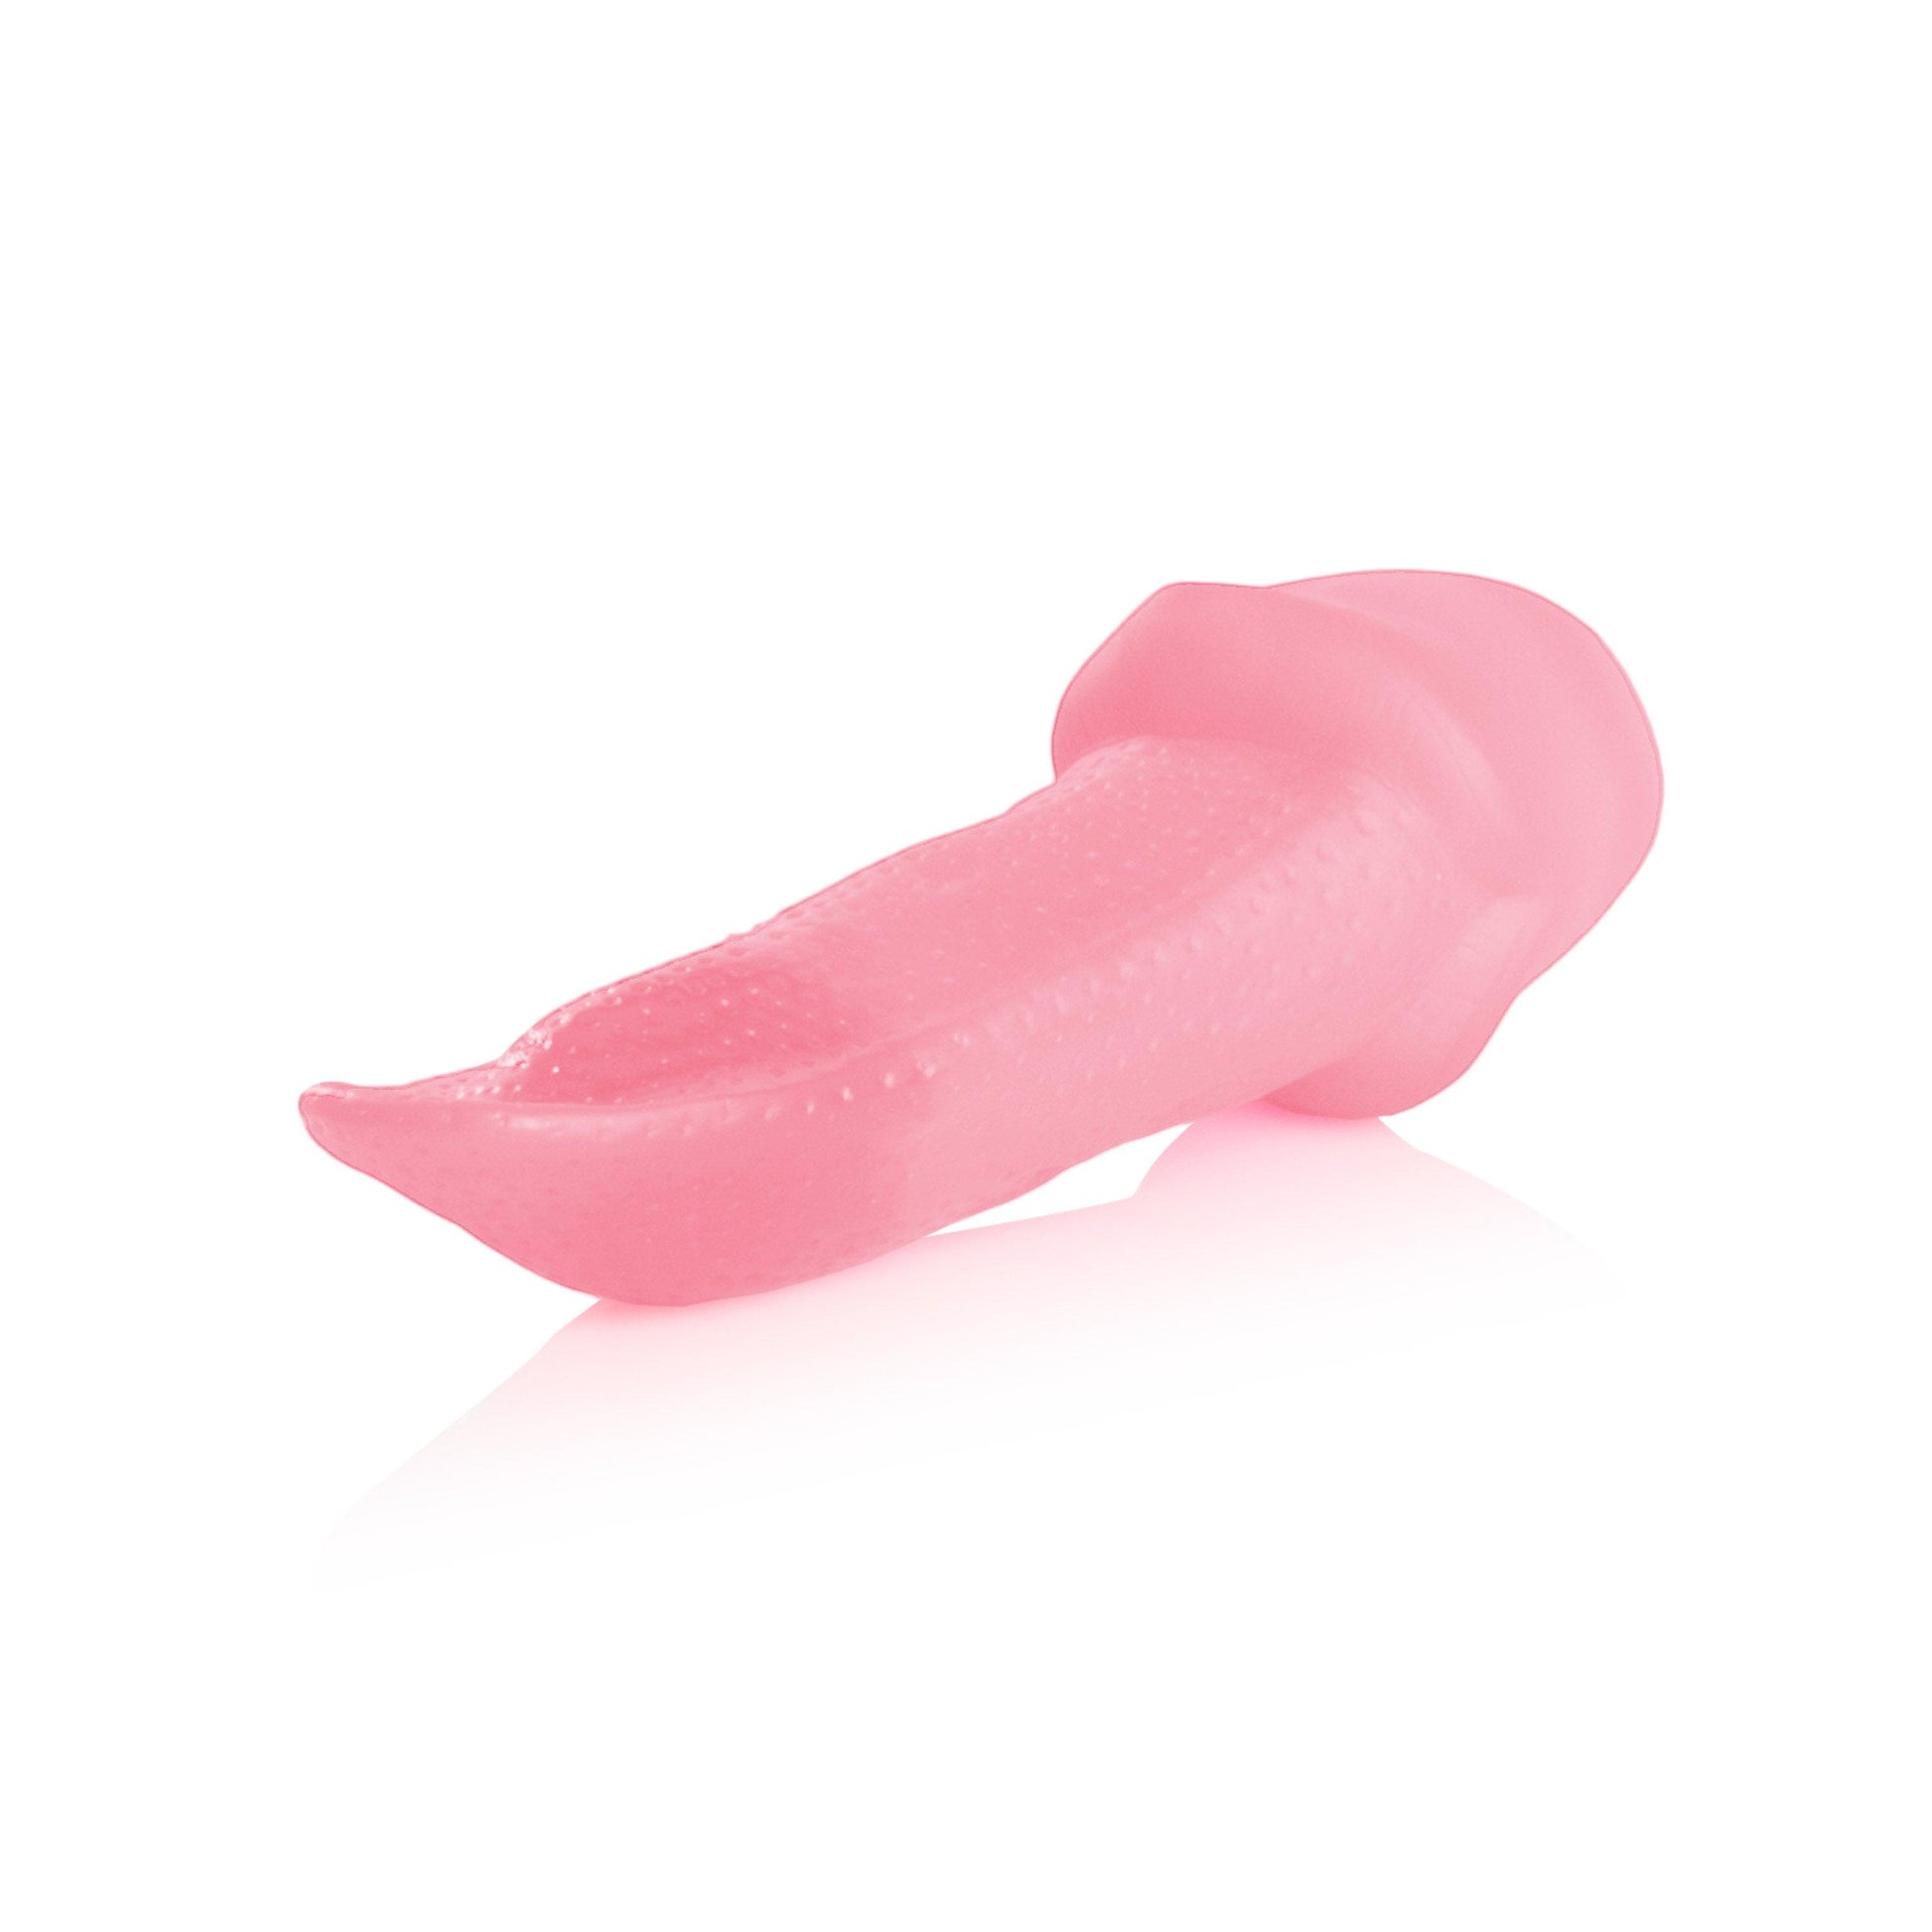 Starter Sultry Sensations Kit - Pink - My Sex Toy Hub